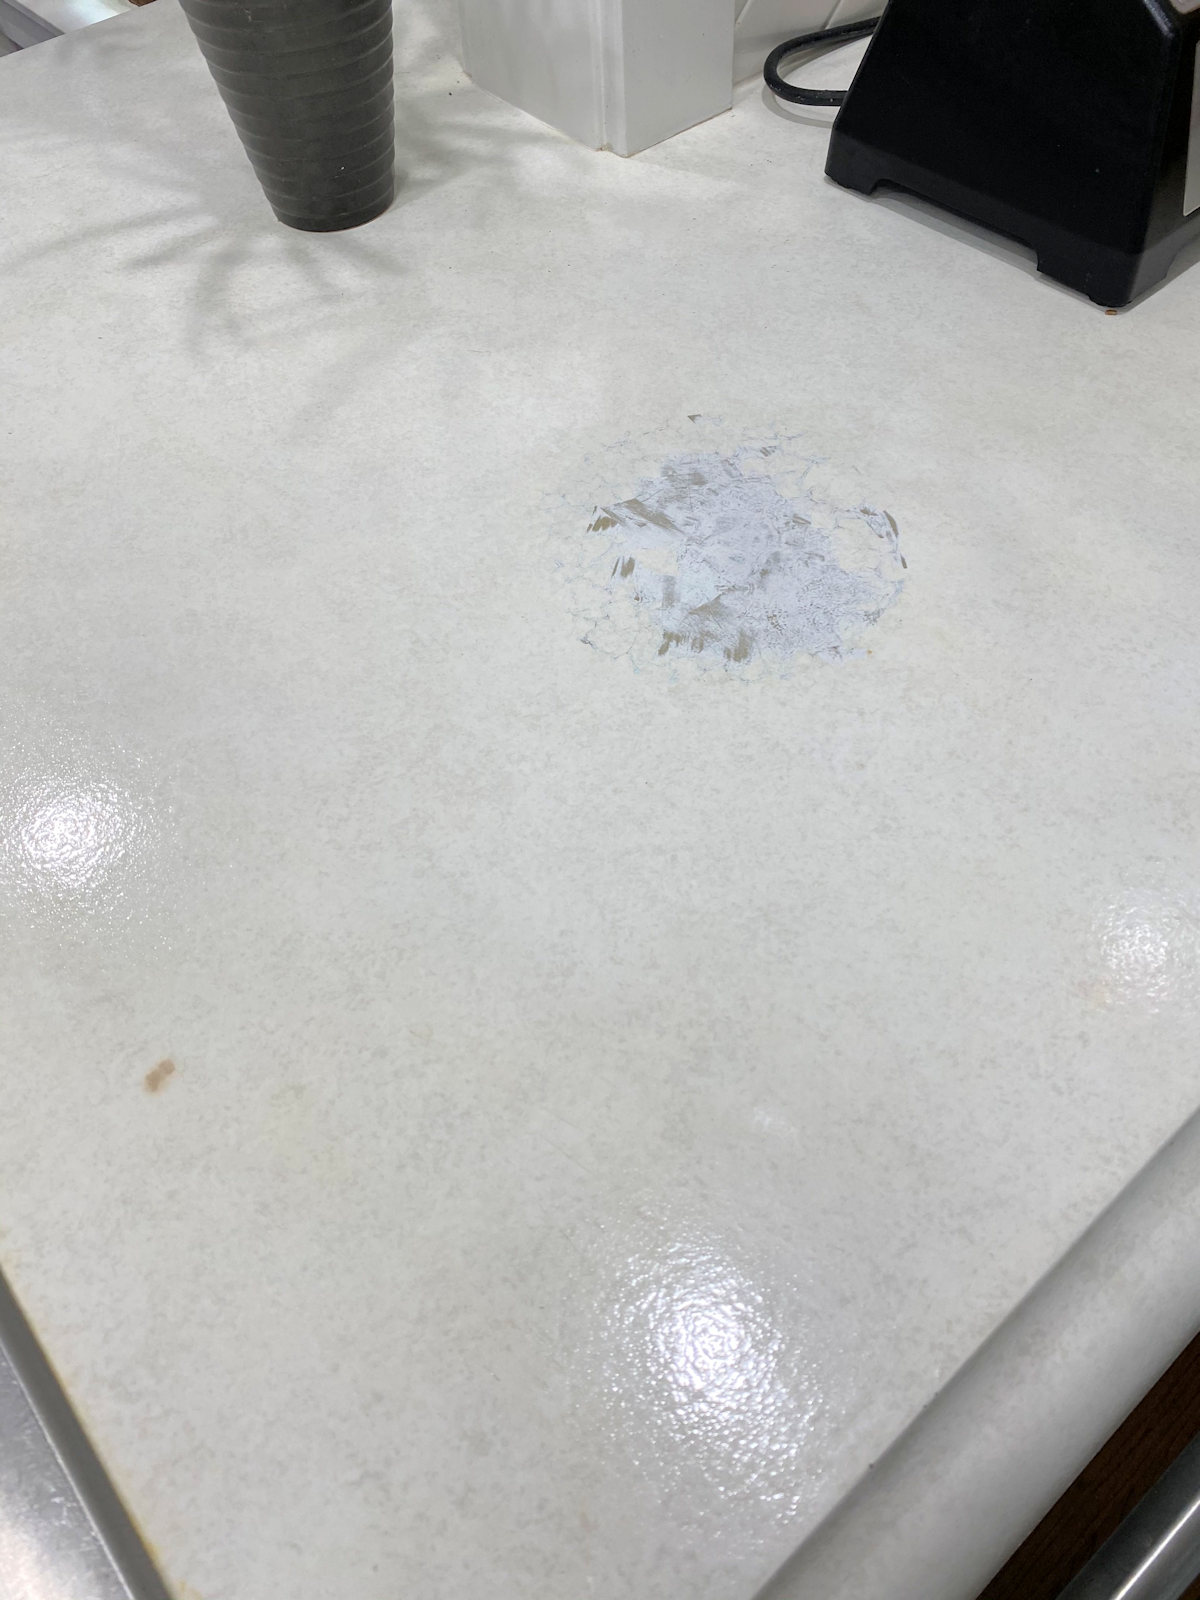 kitchen - concrete countertops - finish eaten away by isopropyl alcohol